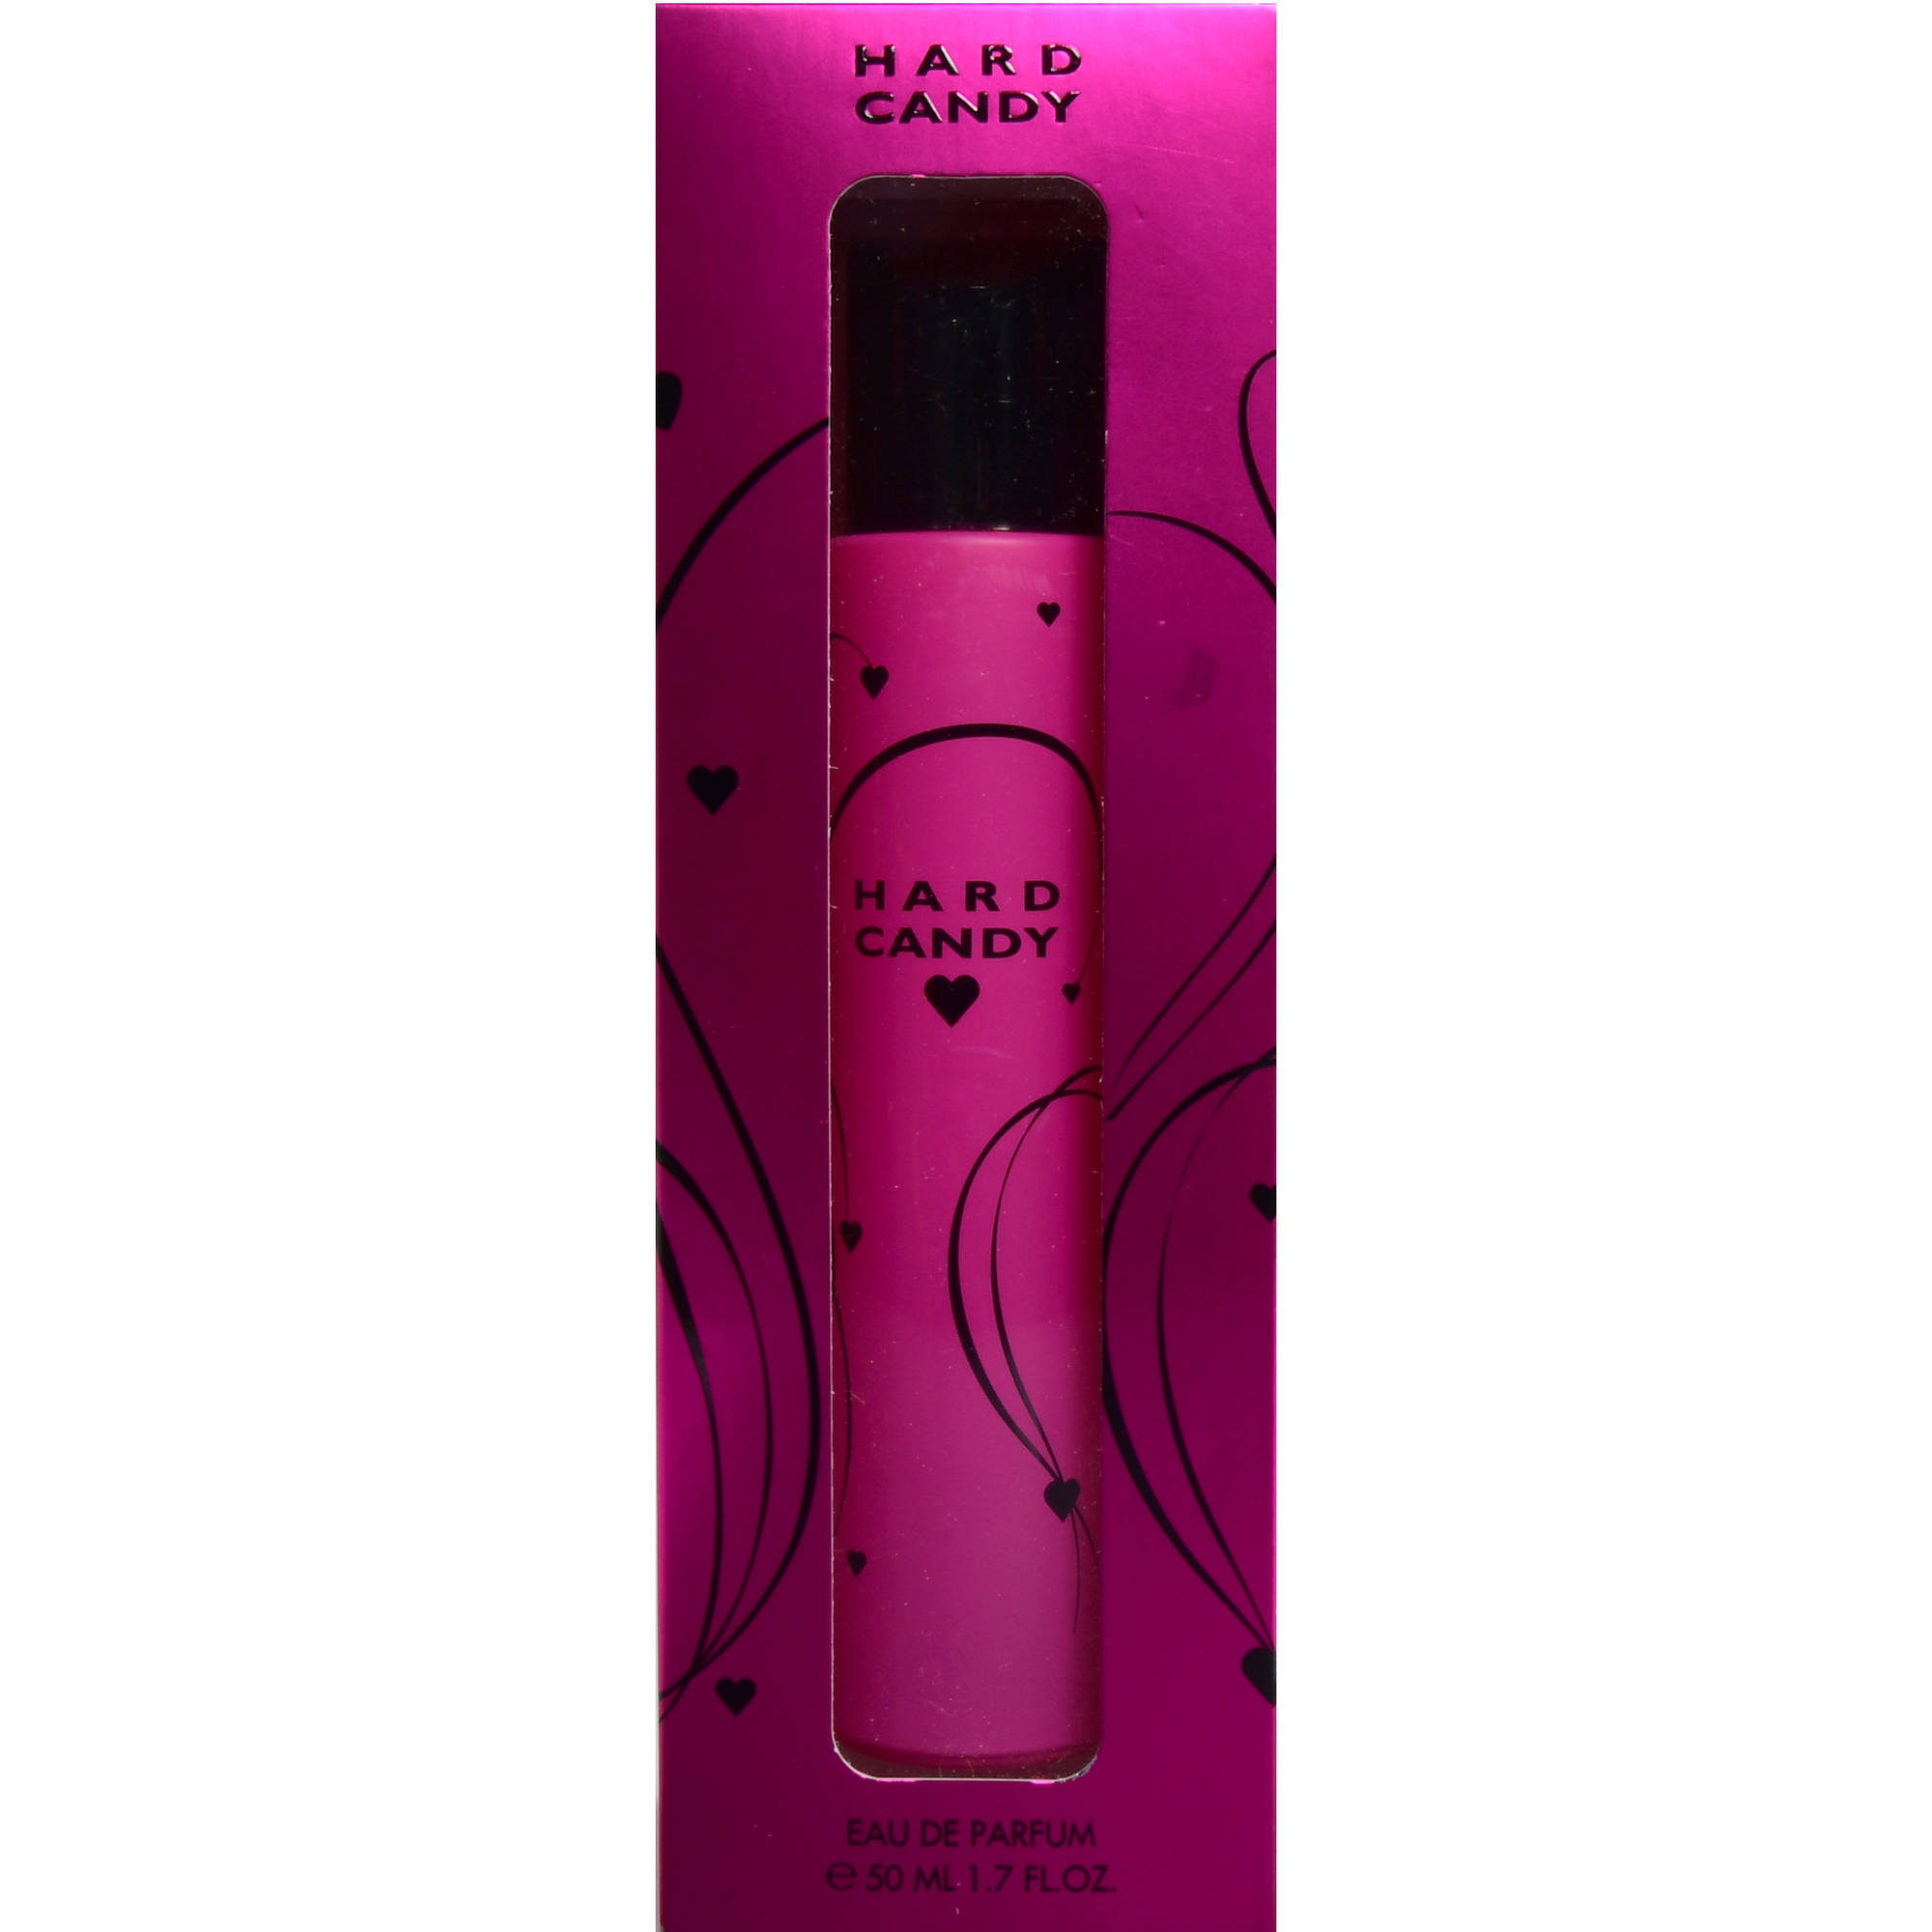 Hard Candy Pink Eau de Parfum, Perfume for Women, 1.7 Oz Full Size - image 2 of 3